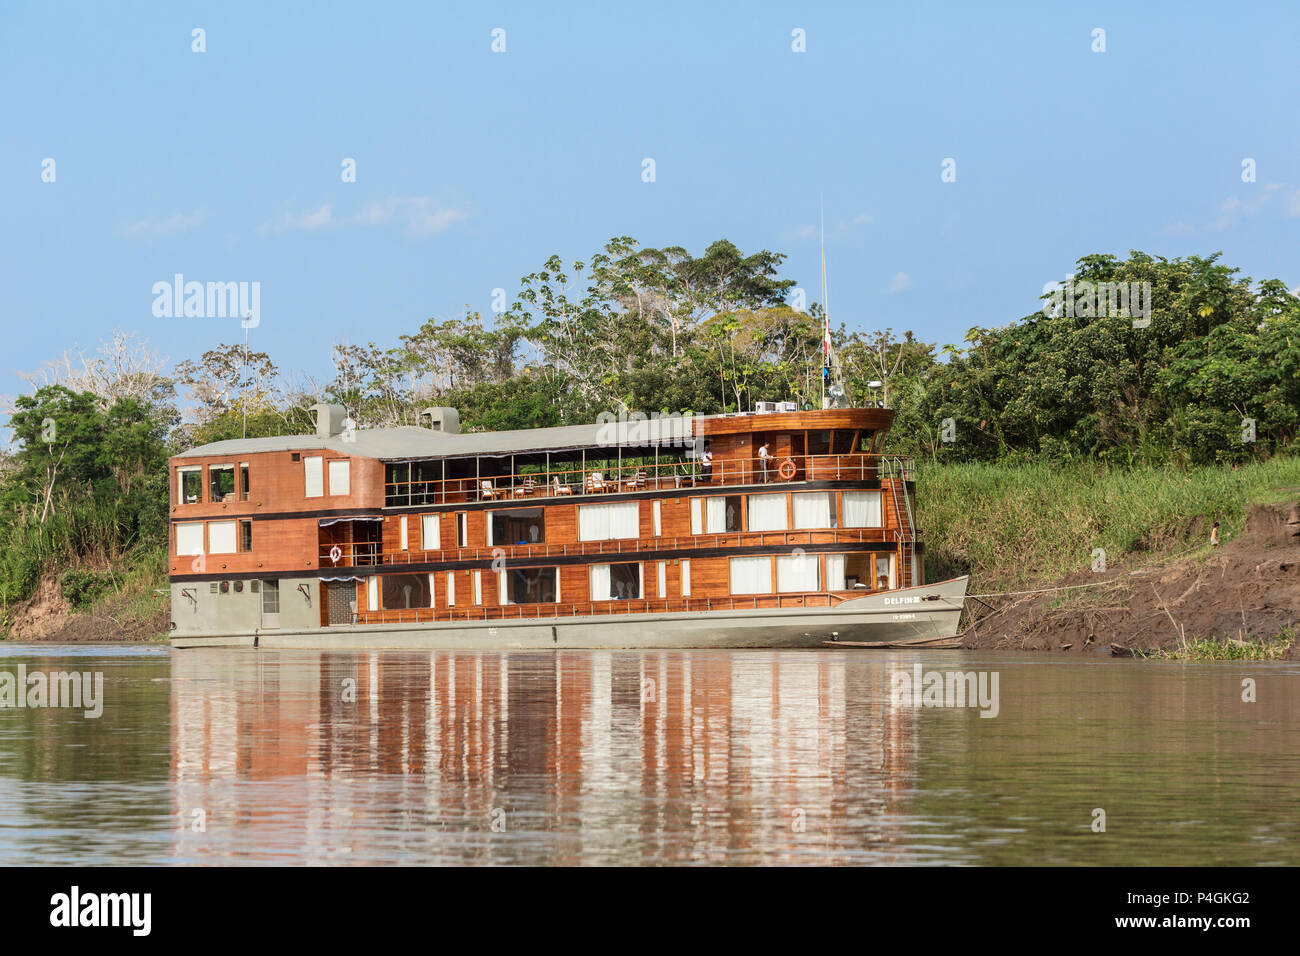 Die Expedition River Boat Delfin II in der Nähe von clavero See, Obere Amazon River Basin, Loreto, Peru Stockfoto